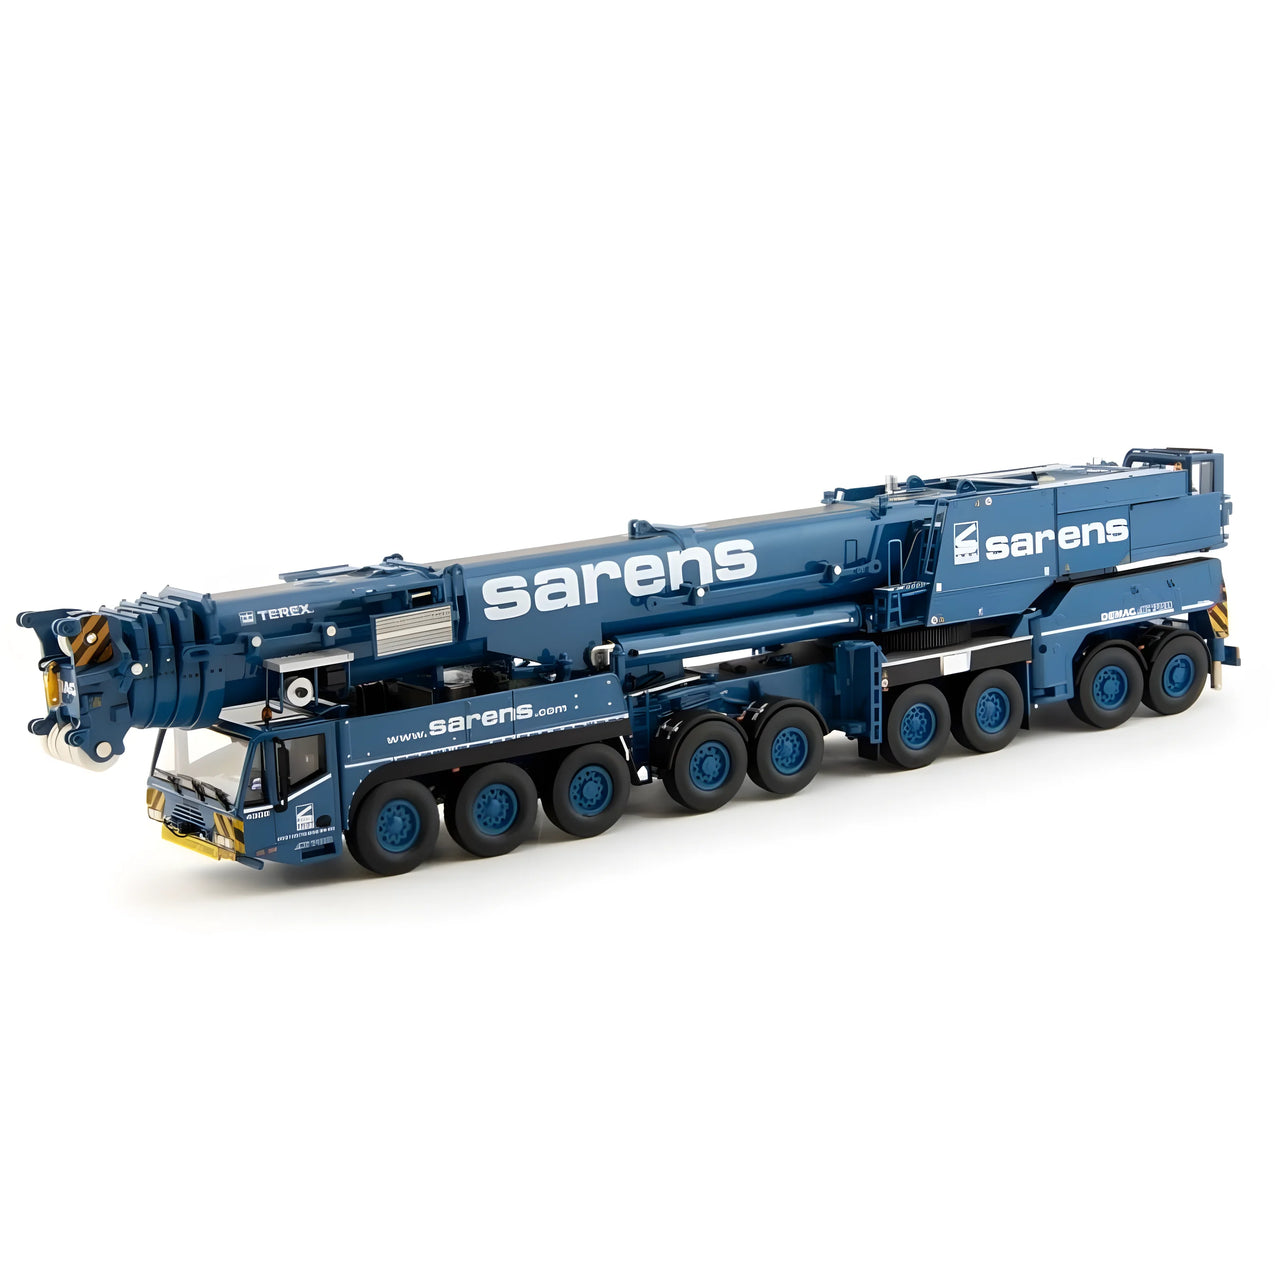 20-3075 Demag AC700-9 Sarens Edition Mobile Hydraulic Crane 1:50 Scale (Discontinued Model) (Pre Sale)